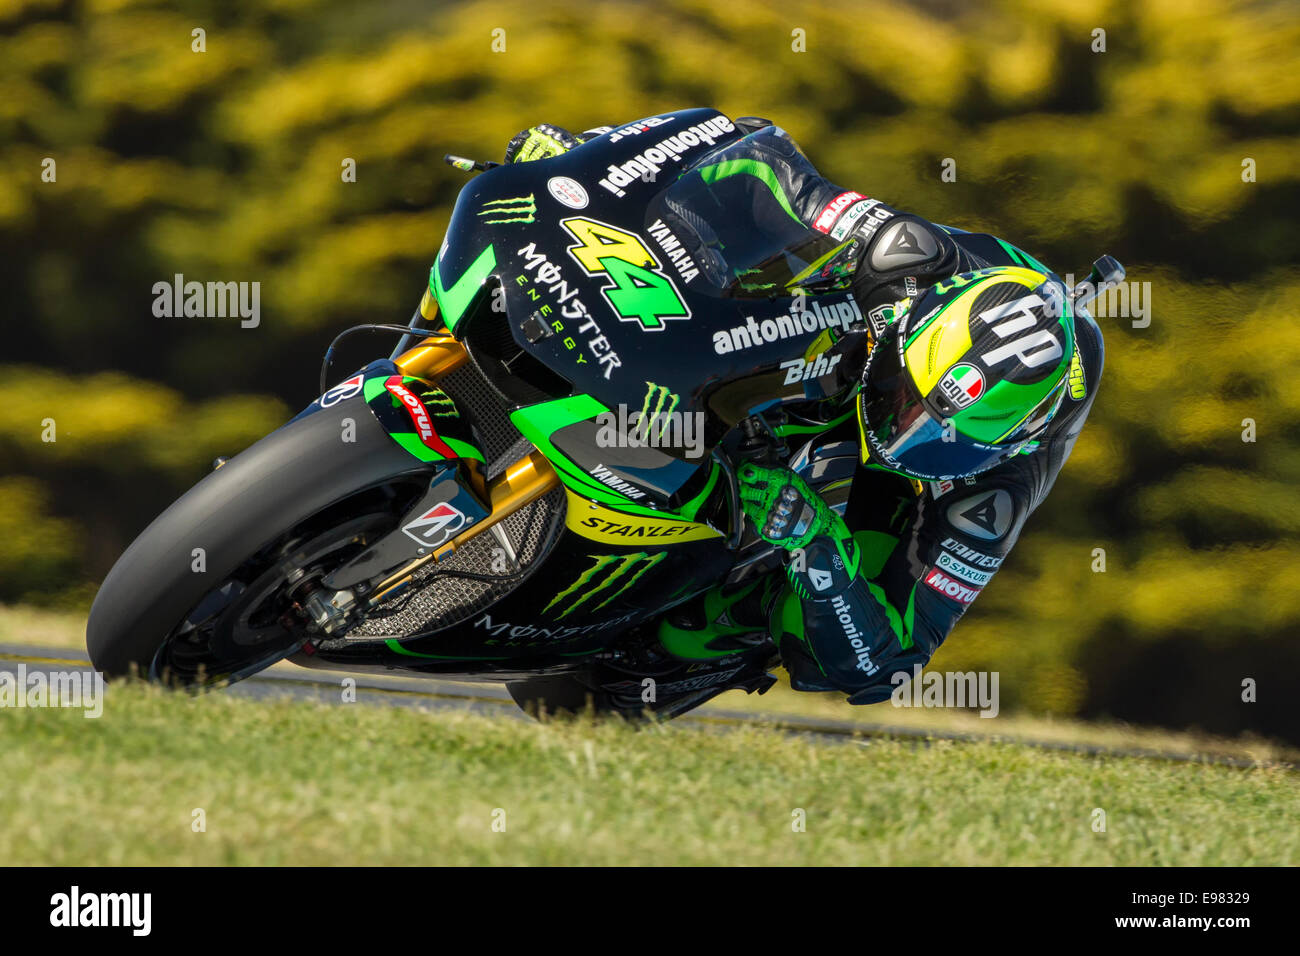 Yamaha Tech 3 MotoGP rider Pol Espargaro vendredi lors de la pratique libre  de la Tissot 2014 Grand Prix Moto d'Australie Photo Stock - Alamy